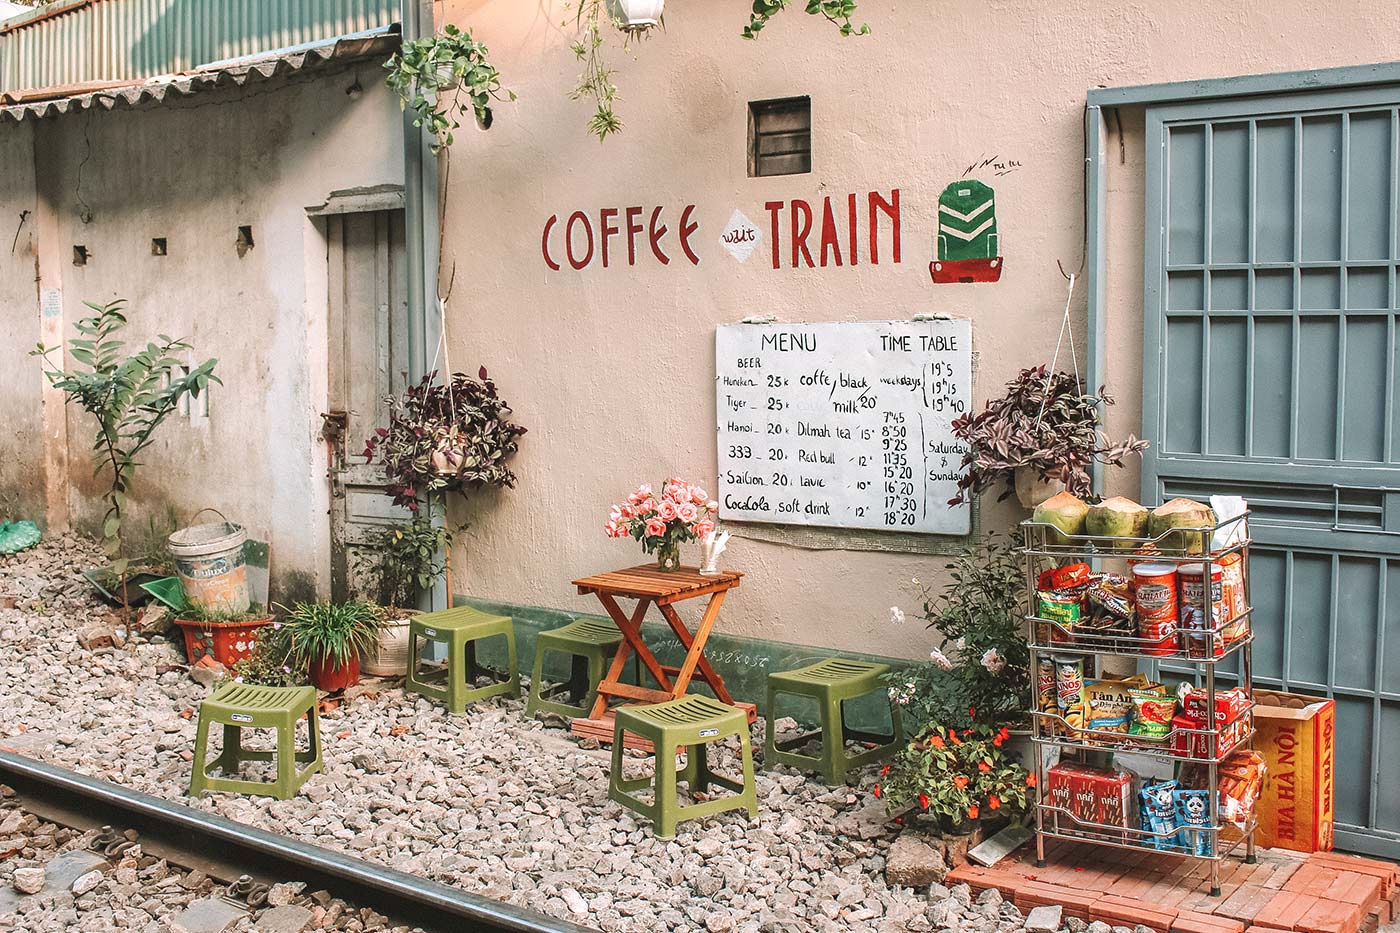 Hanoi Train Street / Rail Street coffee cafe and train times